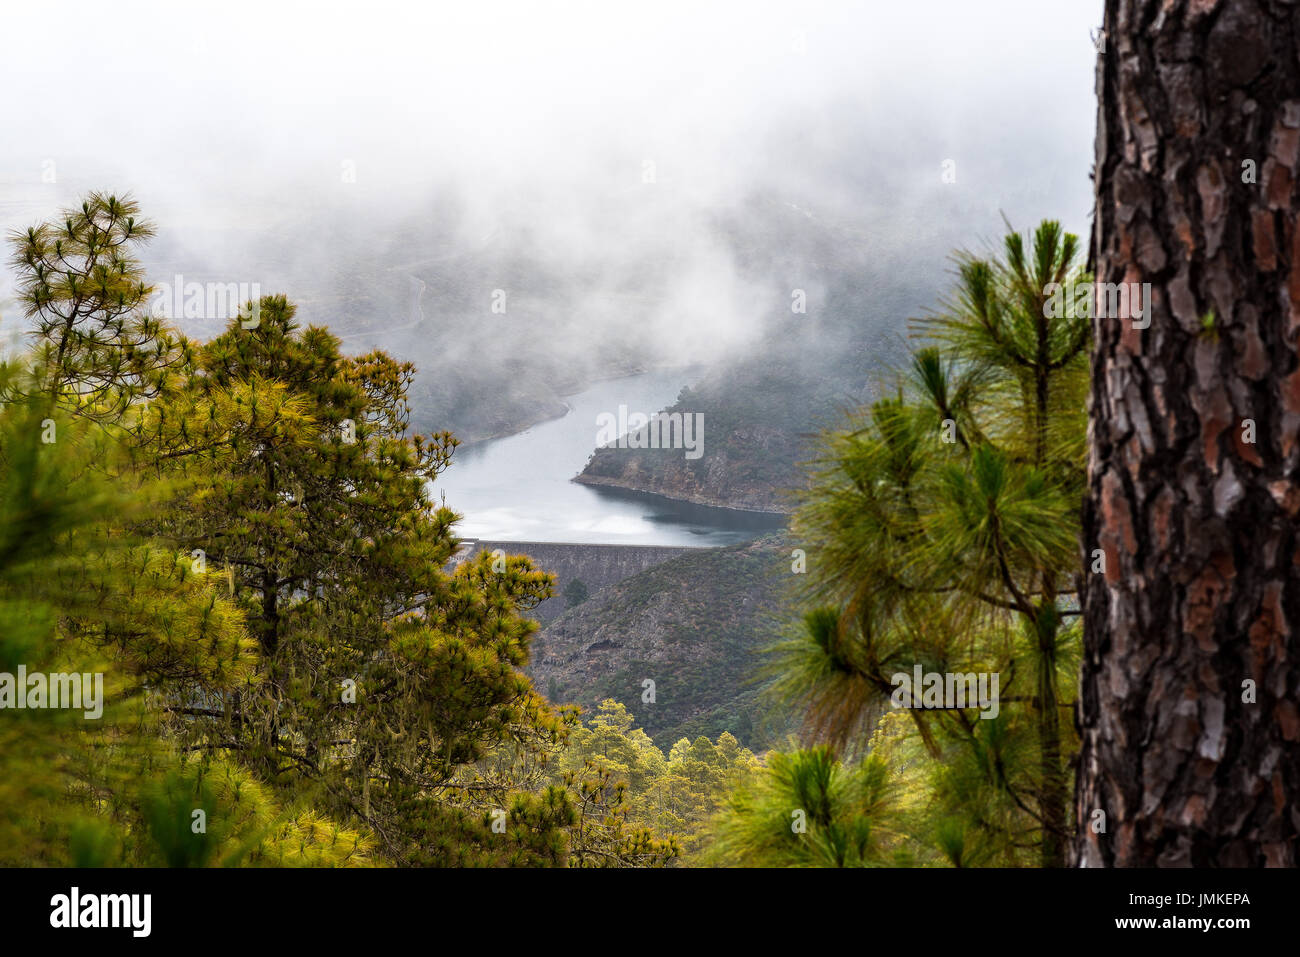 View of the dam of Hoyas, Presa de las Hoyas, from the Tamadaba Forest, Gran Canaria, Canary islands Stock Photo